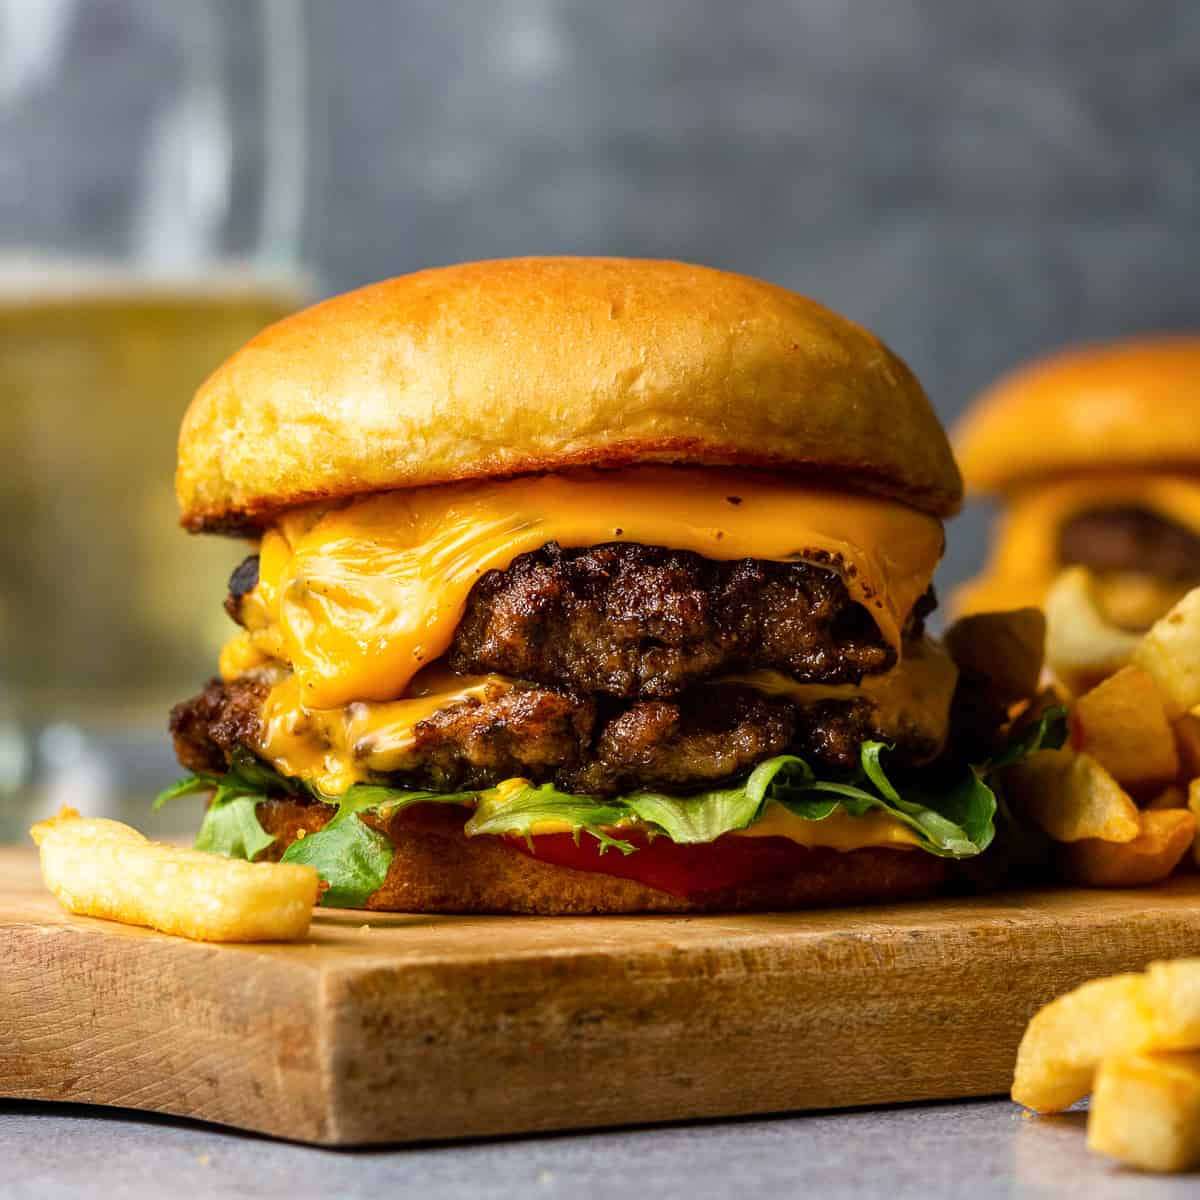 https://www.thecookierookie.com/wp-content/uploads/2020/01/featured-smash-burgers-recipe.jpg